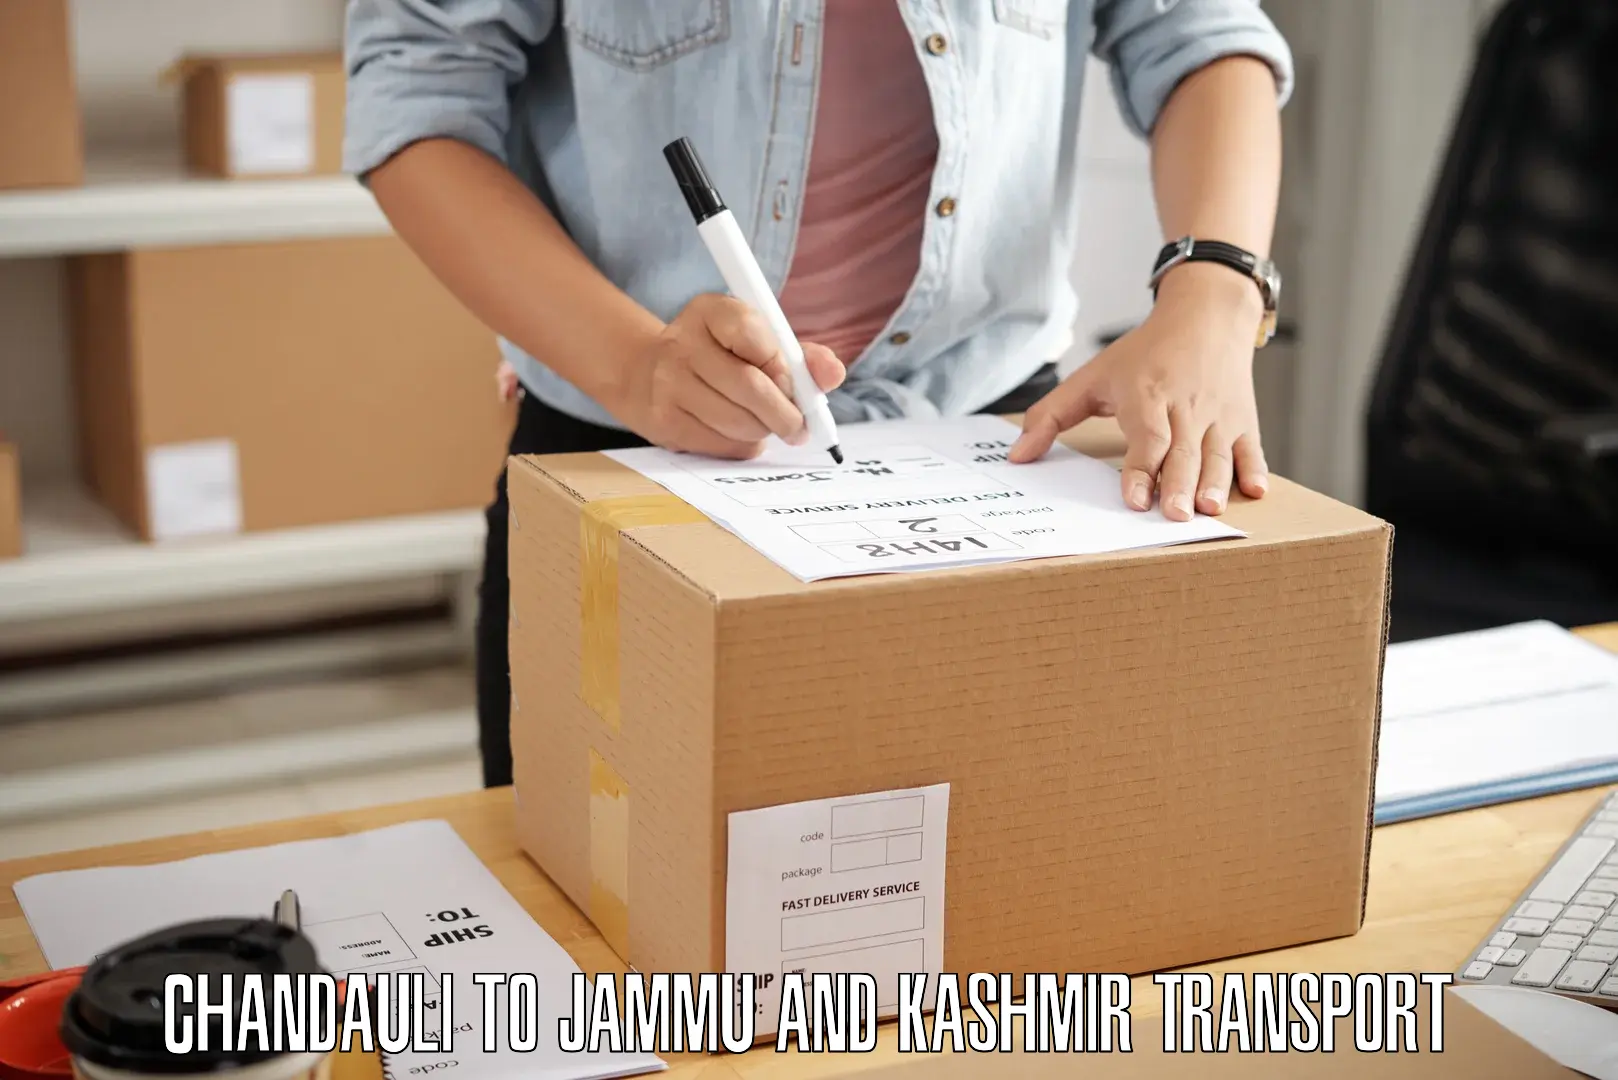 Transport in sharing Chandauli to Srinagar Kashmir